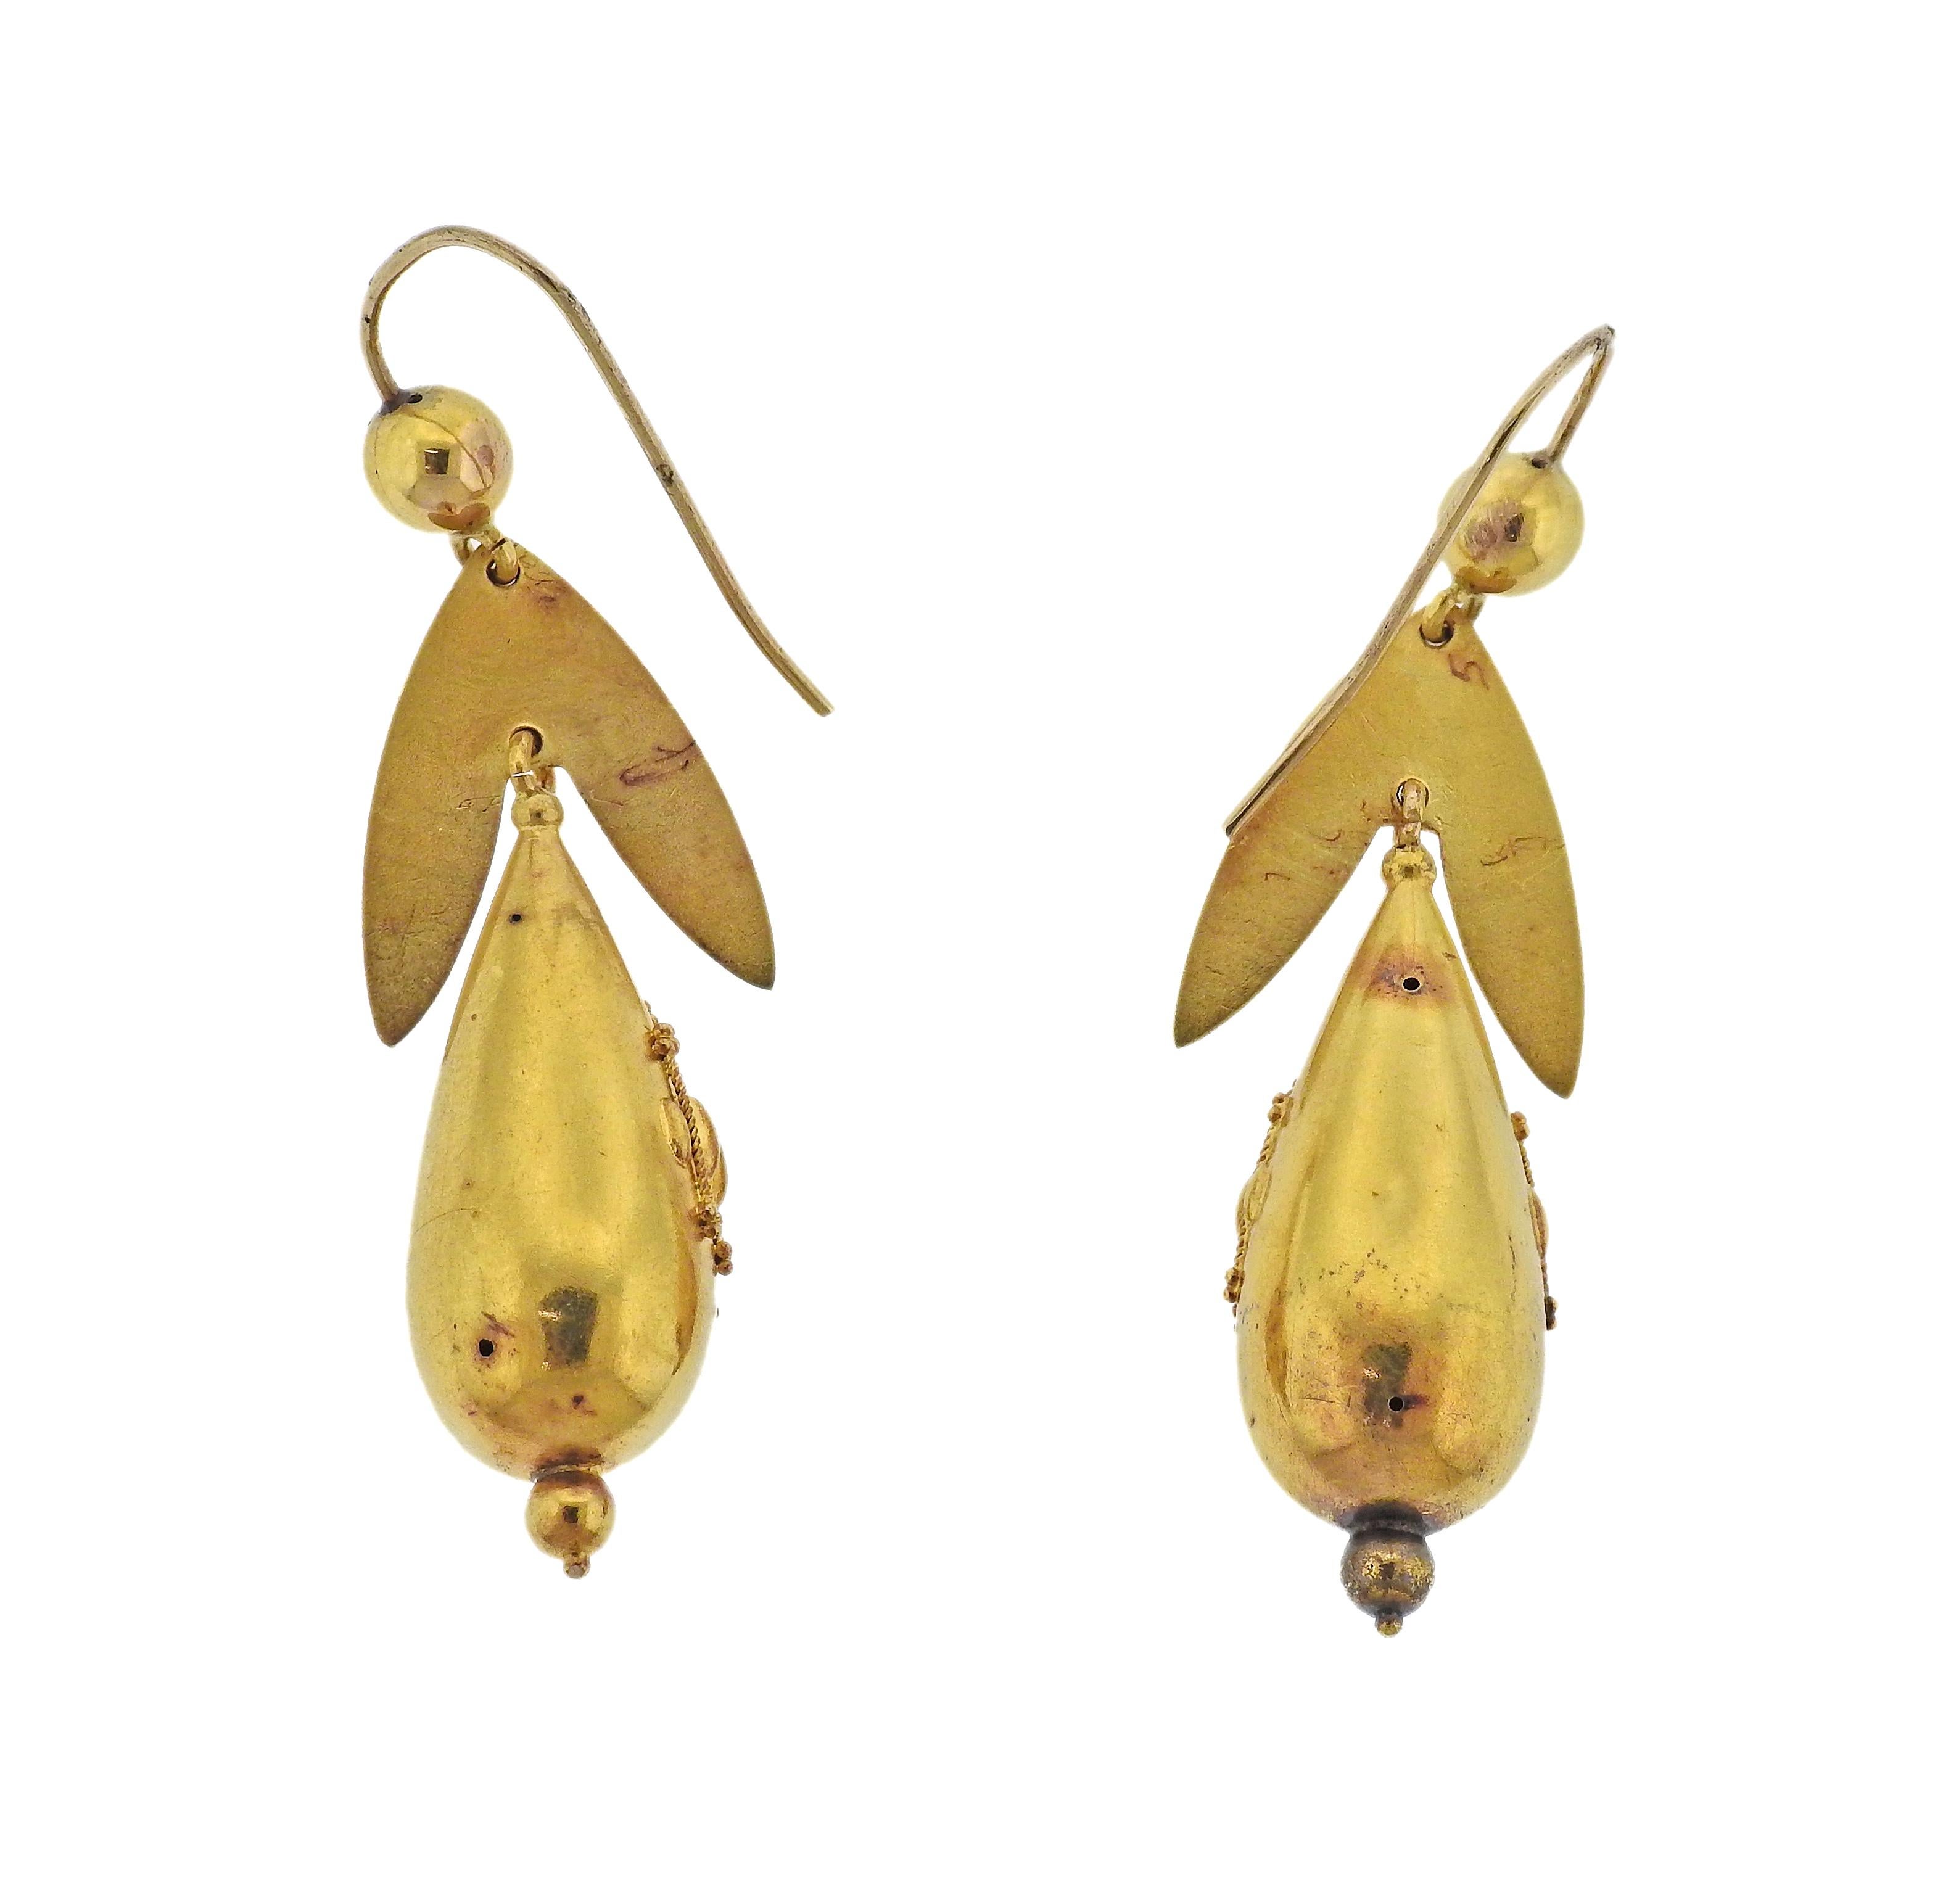 Pair of Etruscan Revival 14k gold drop earrings. Measuring 53mm x 16mm. Weight - 7.5 grams.